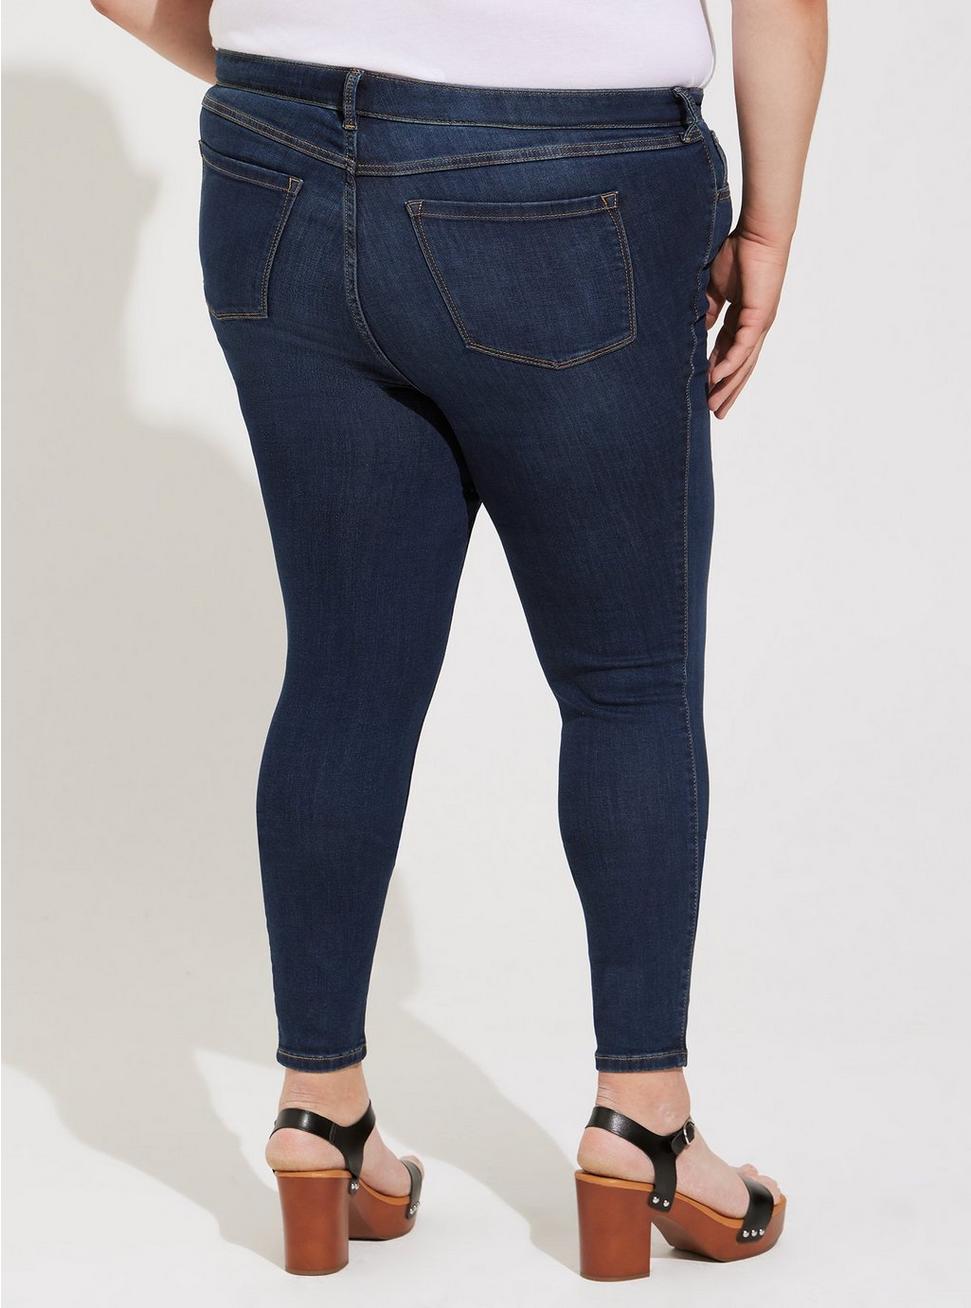 MidFit Skinny Super Soft High-Rise Jean, BASIN, alternate